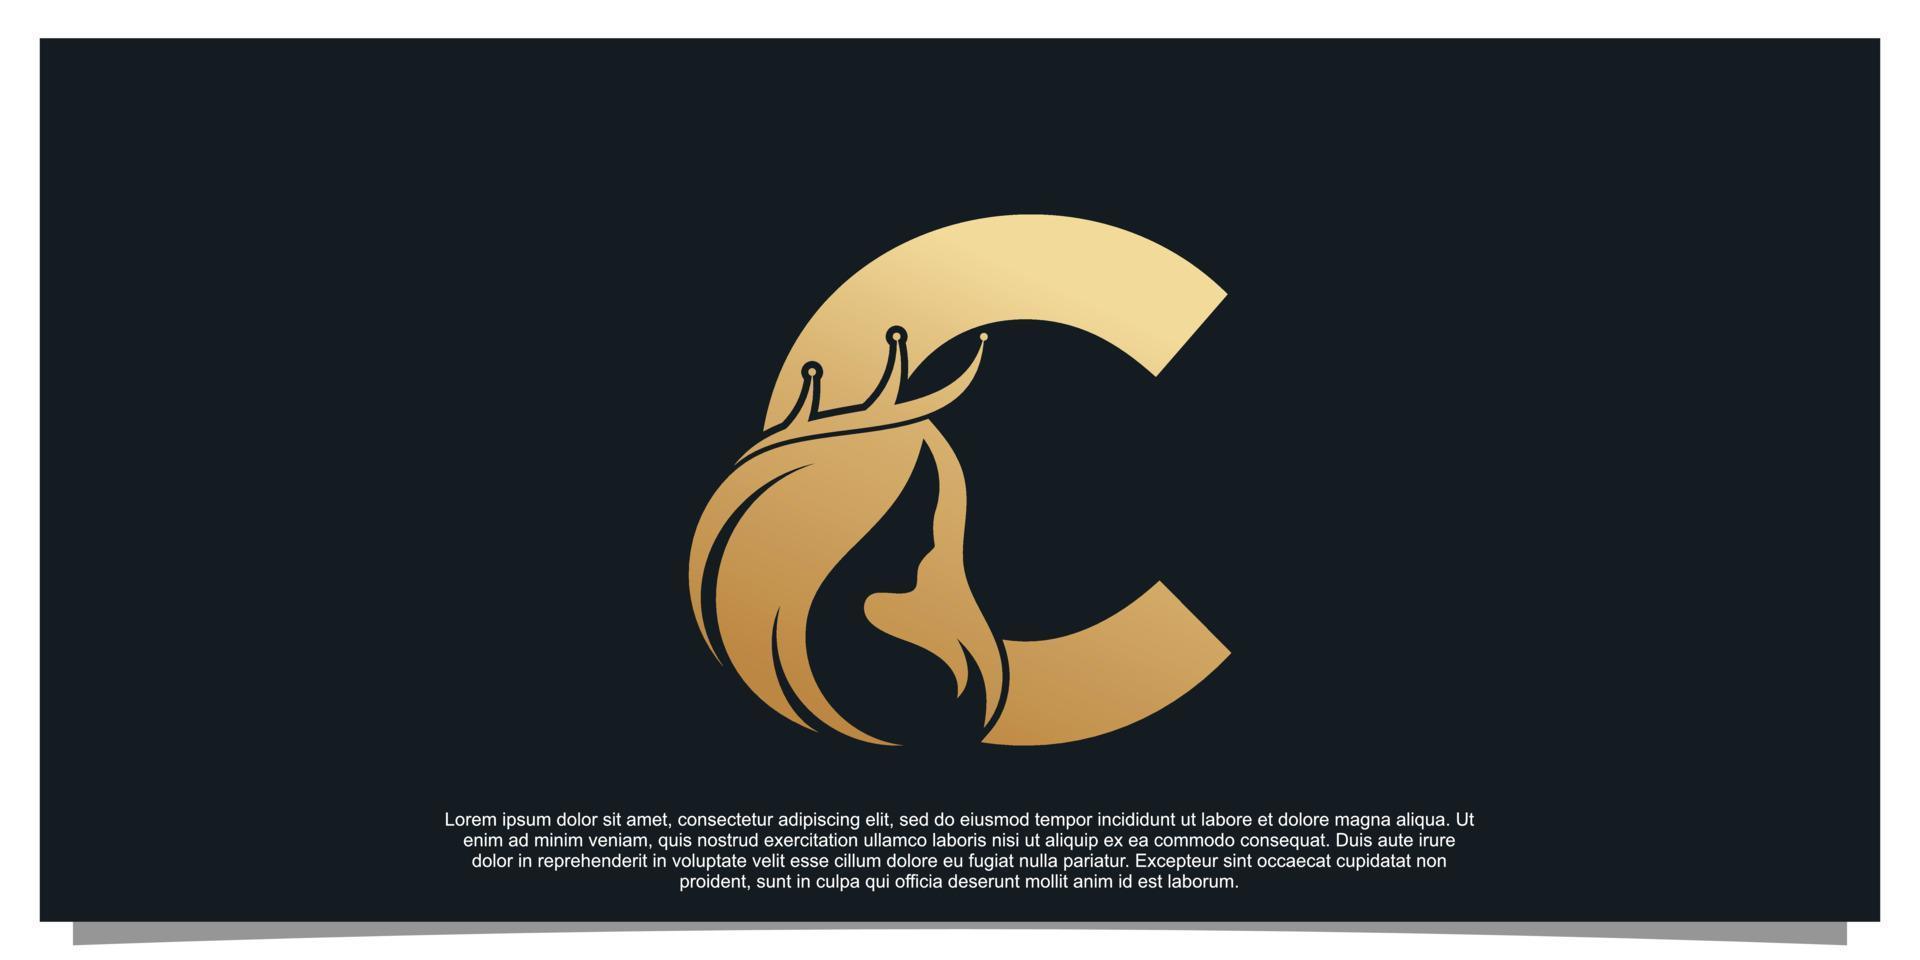 diseño de logotipo de monograma letra inicial c para negocios con mujeres concepto de belleza vector premium